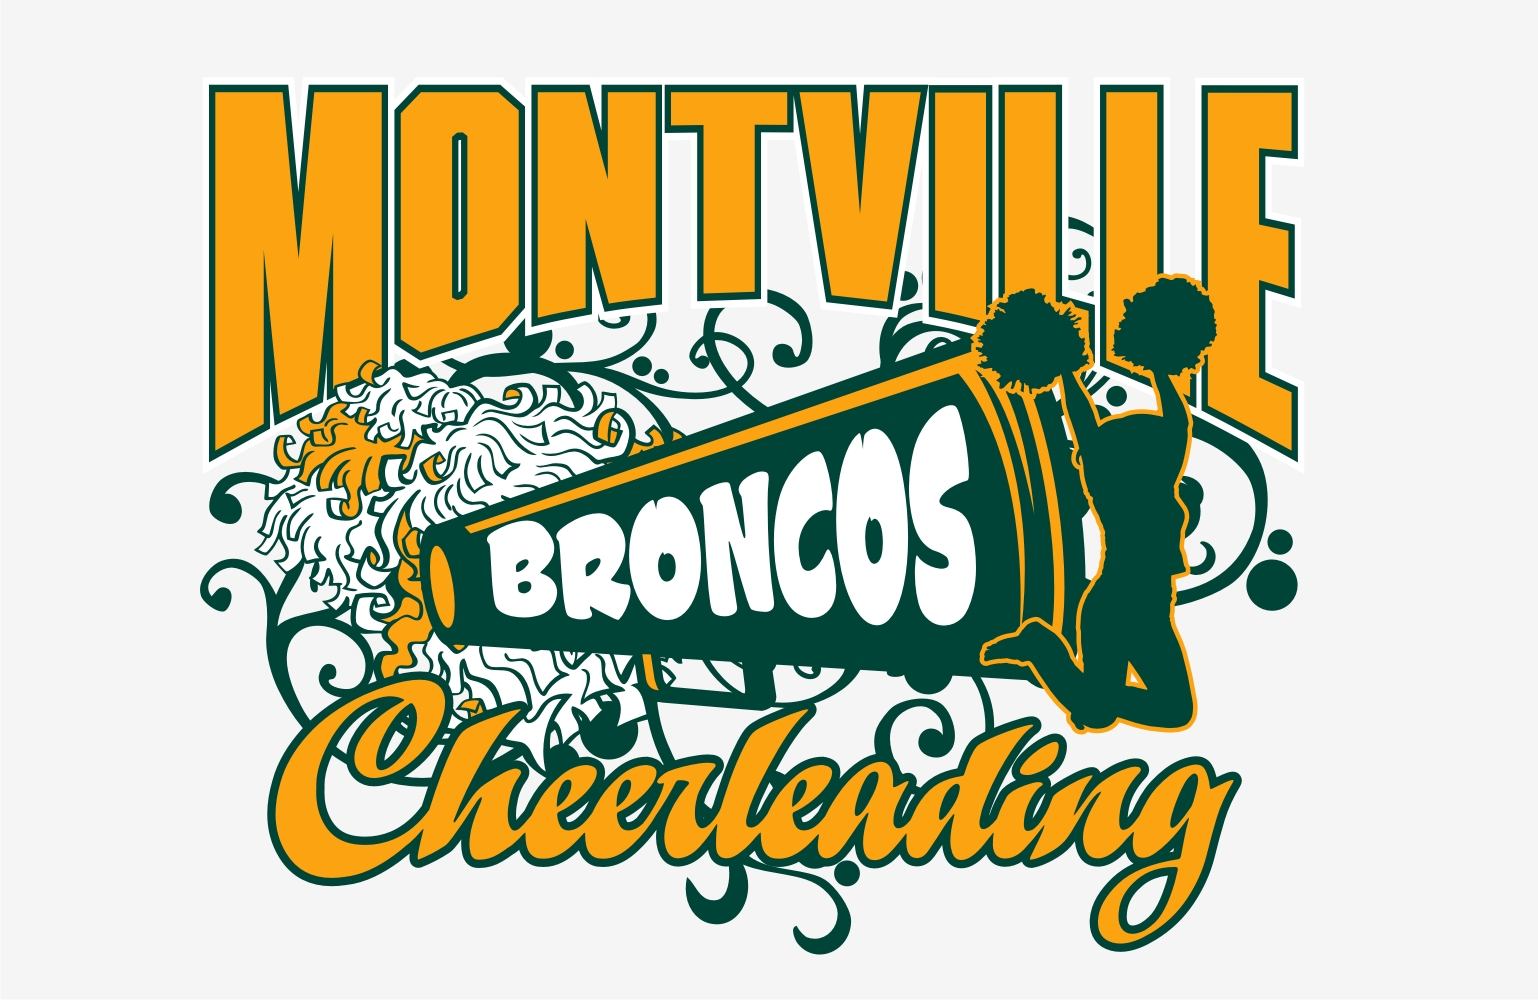 Montville Broncos Cheerleading Fundraiser